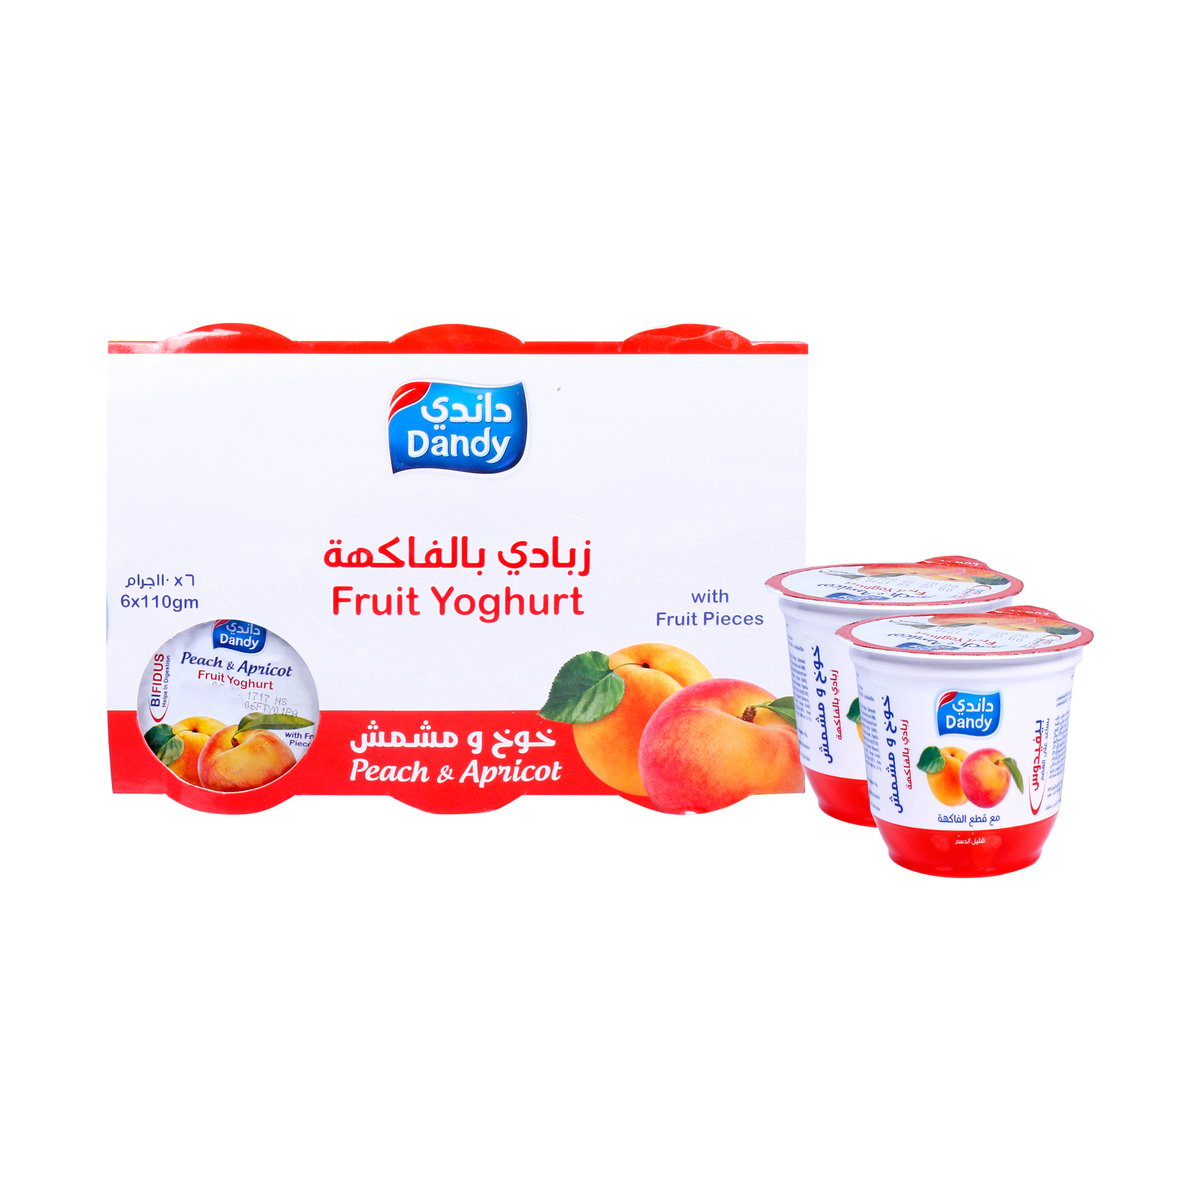 Dandy Fruit Yoghurt Peach and Apricot 6 x 110g